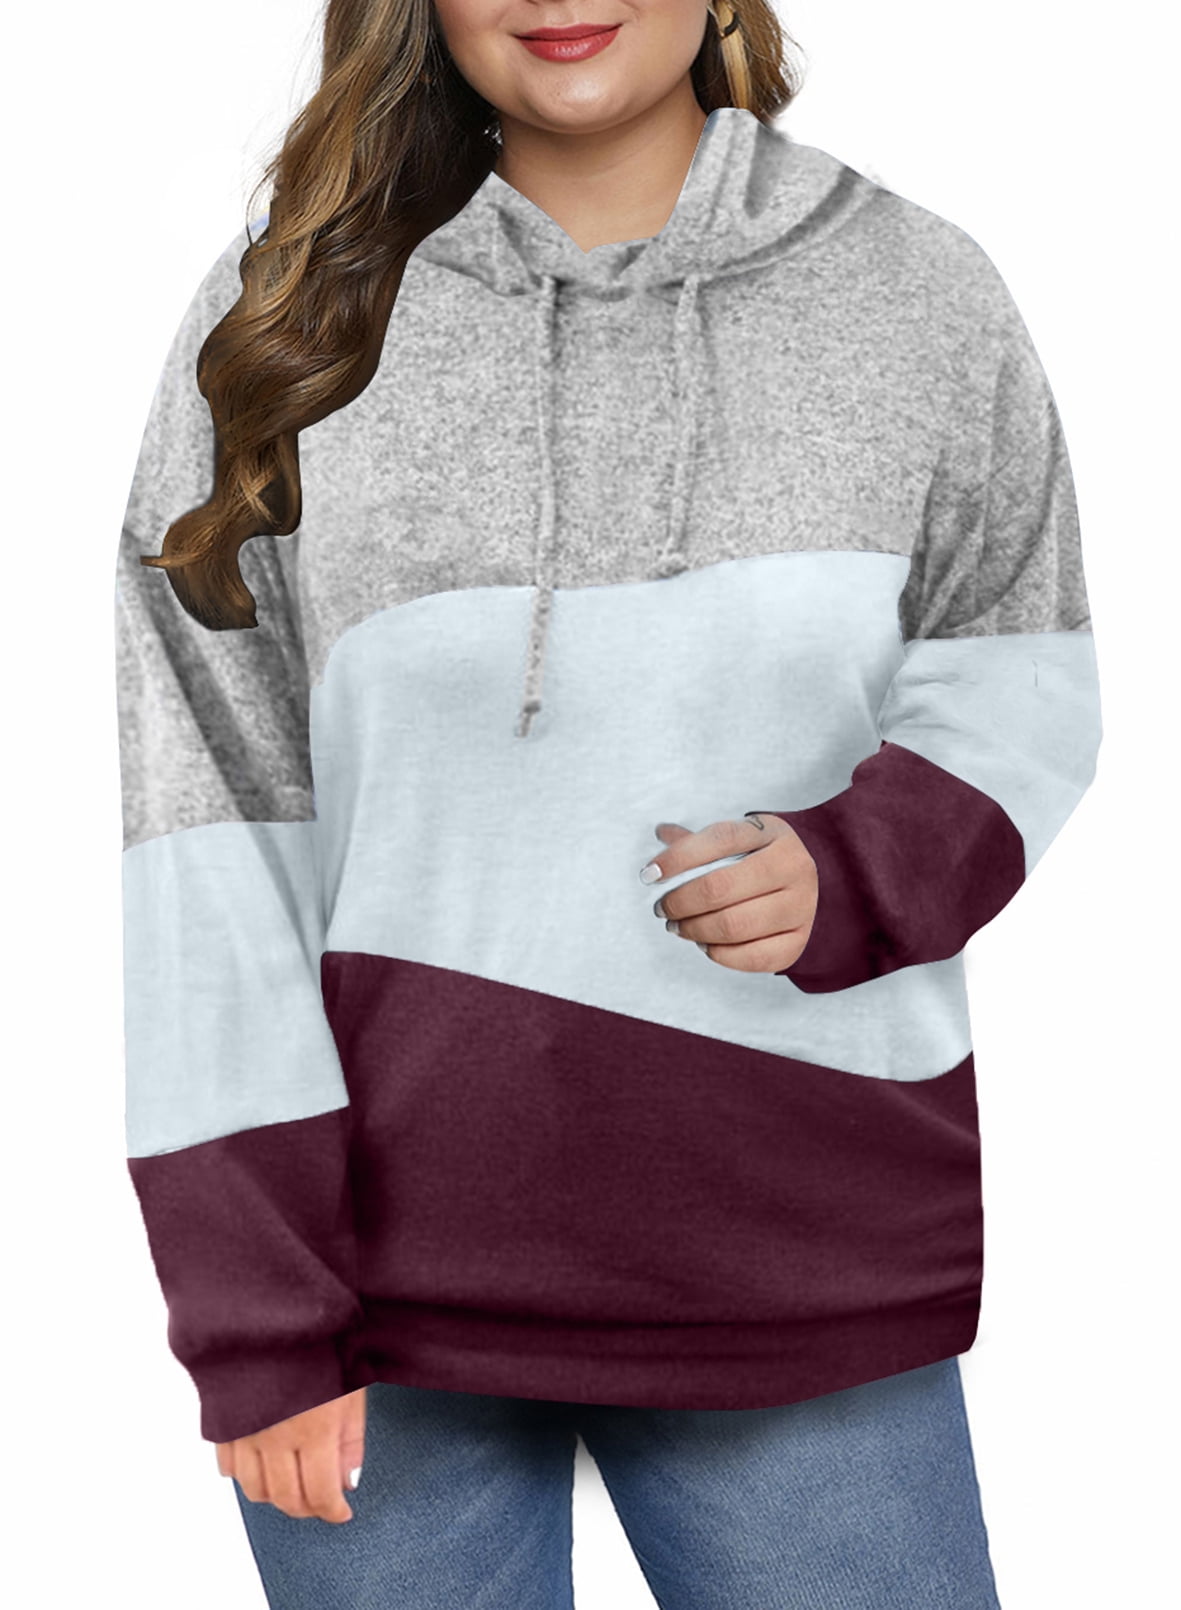 1X-5X Eytino Women Plus Size Pullover Hoodie Colorblock Striped Long Sleeve Hooded Sweatshirt